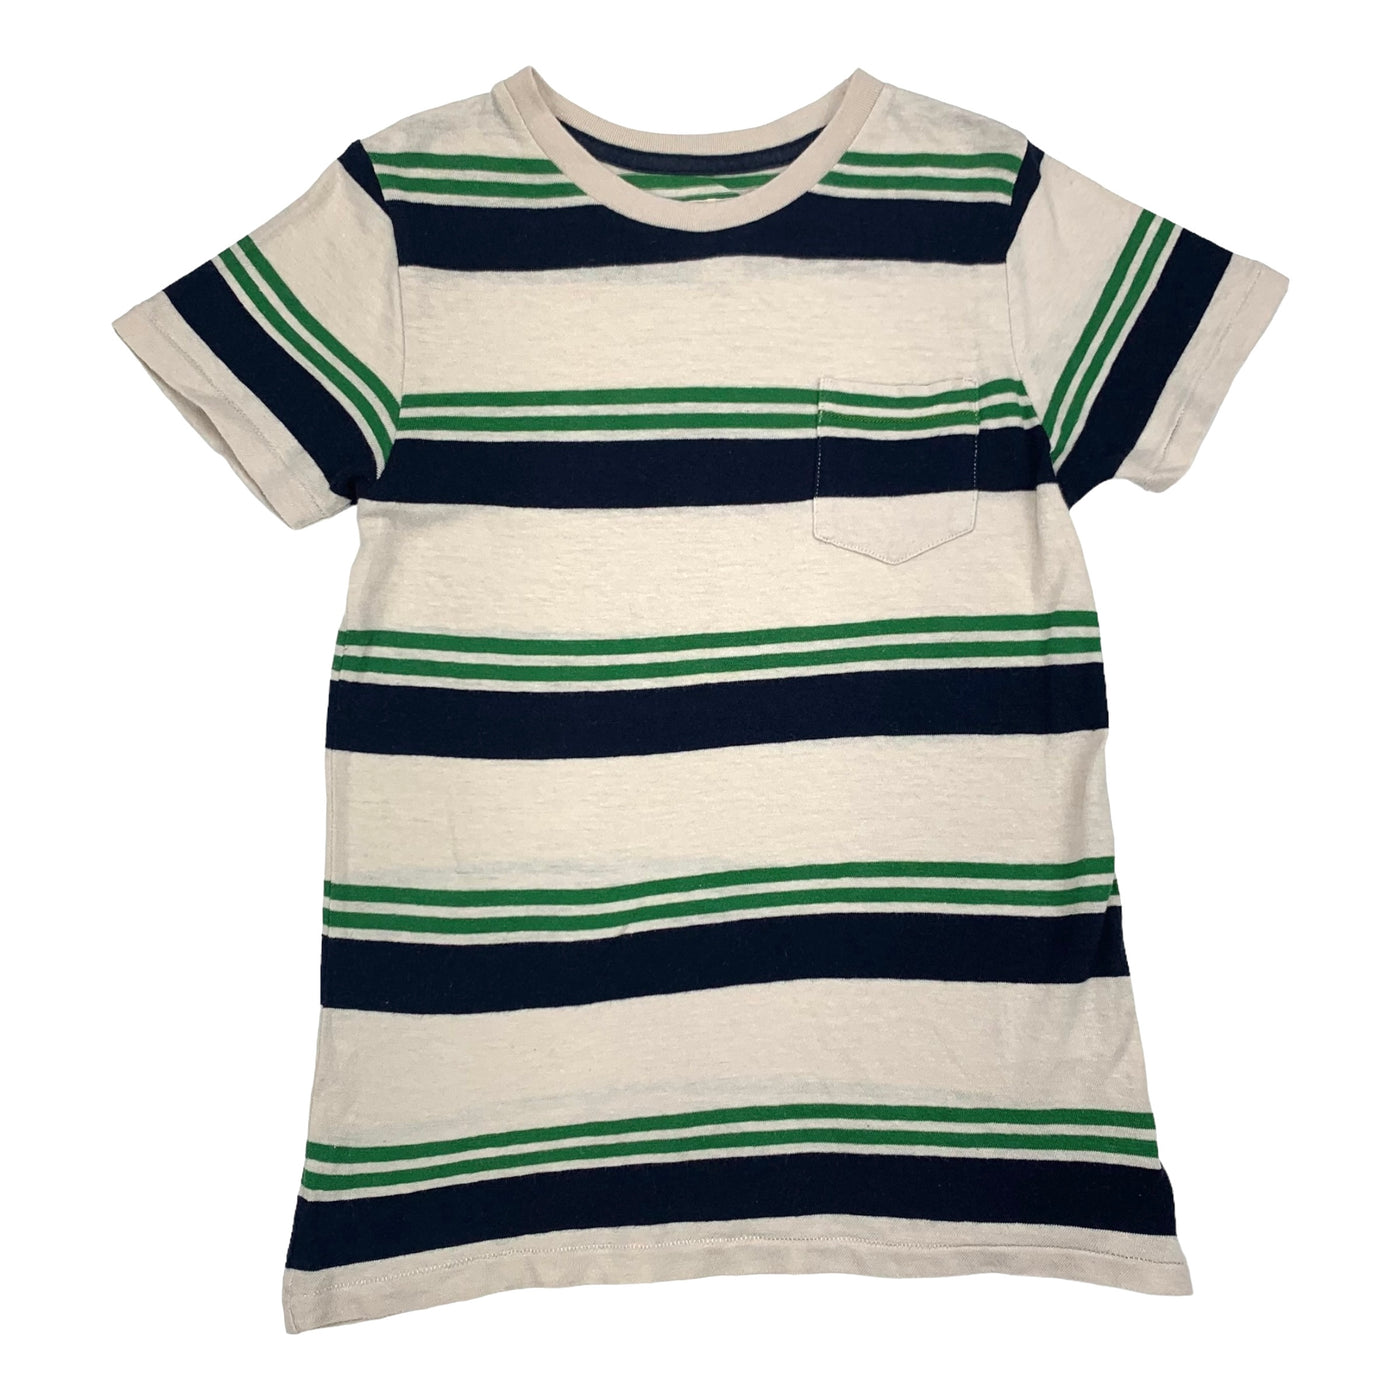 Bellerose tee shirt stripe white navy green size 10